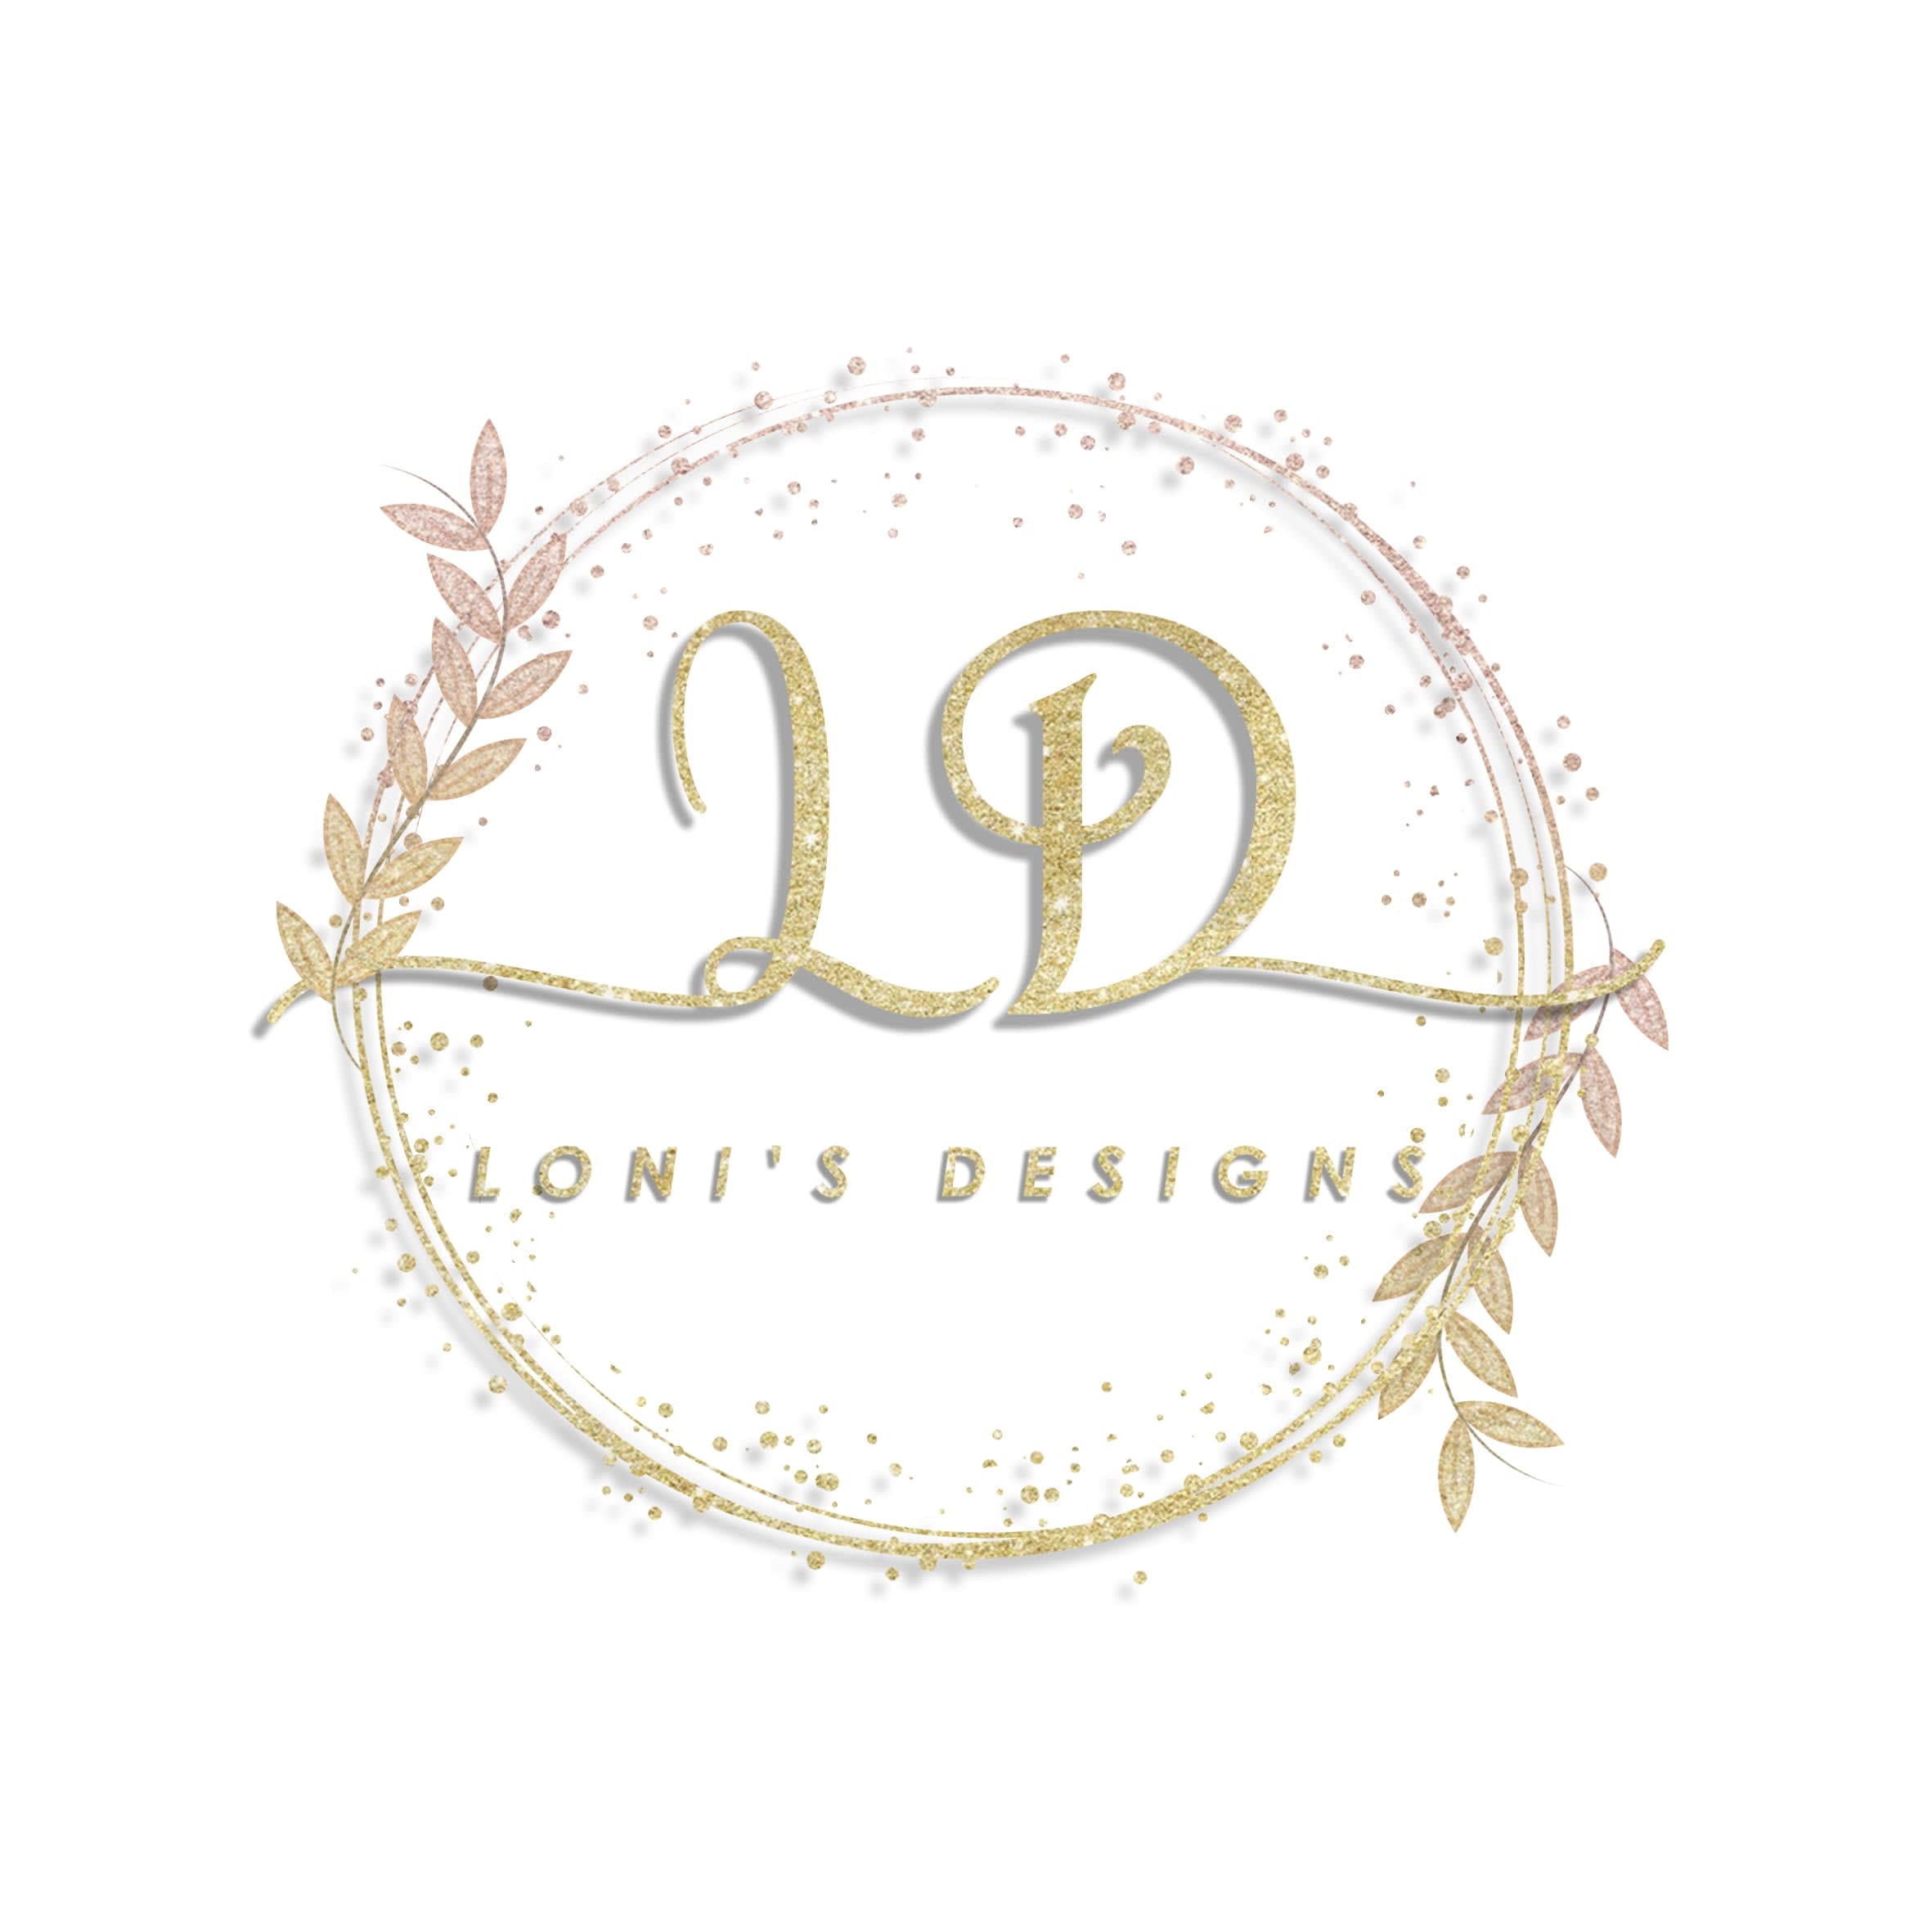 Loni's Designs